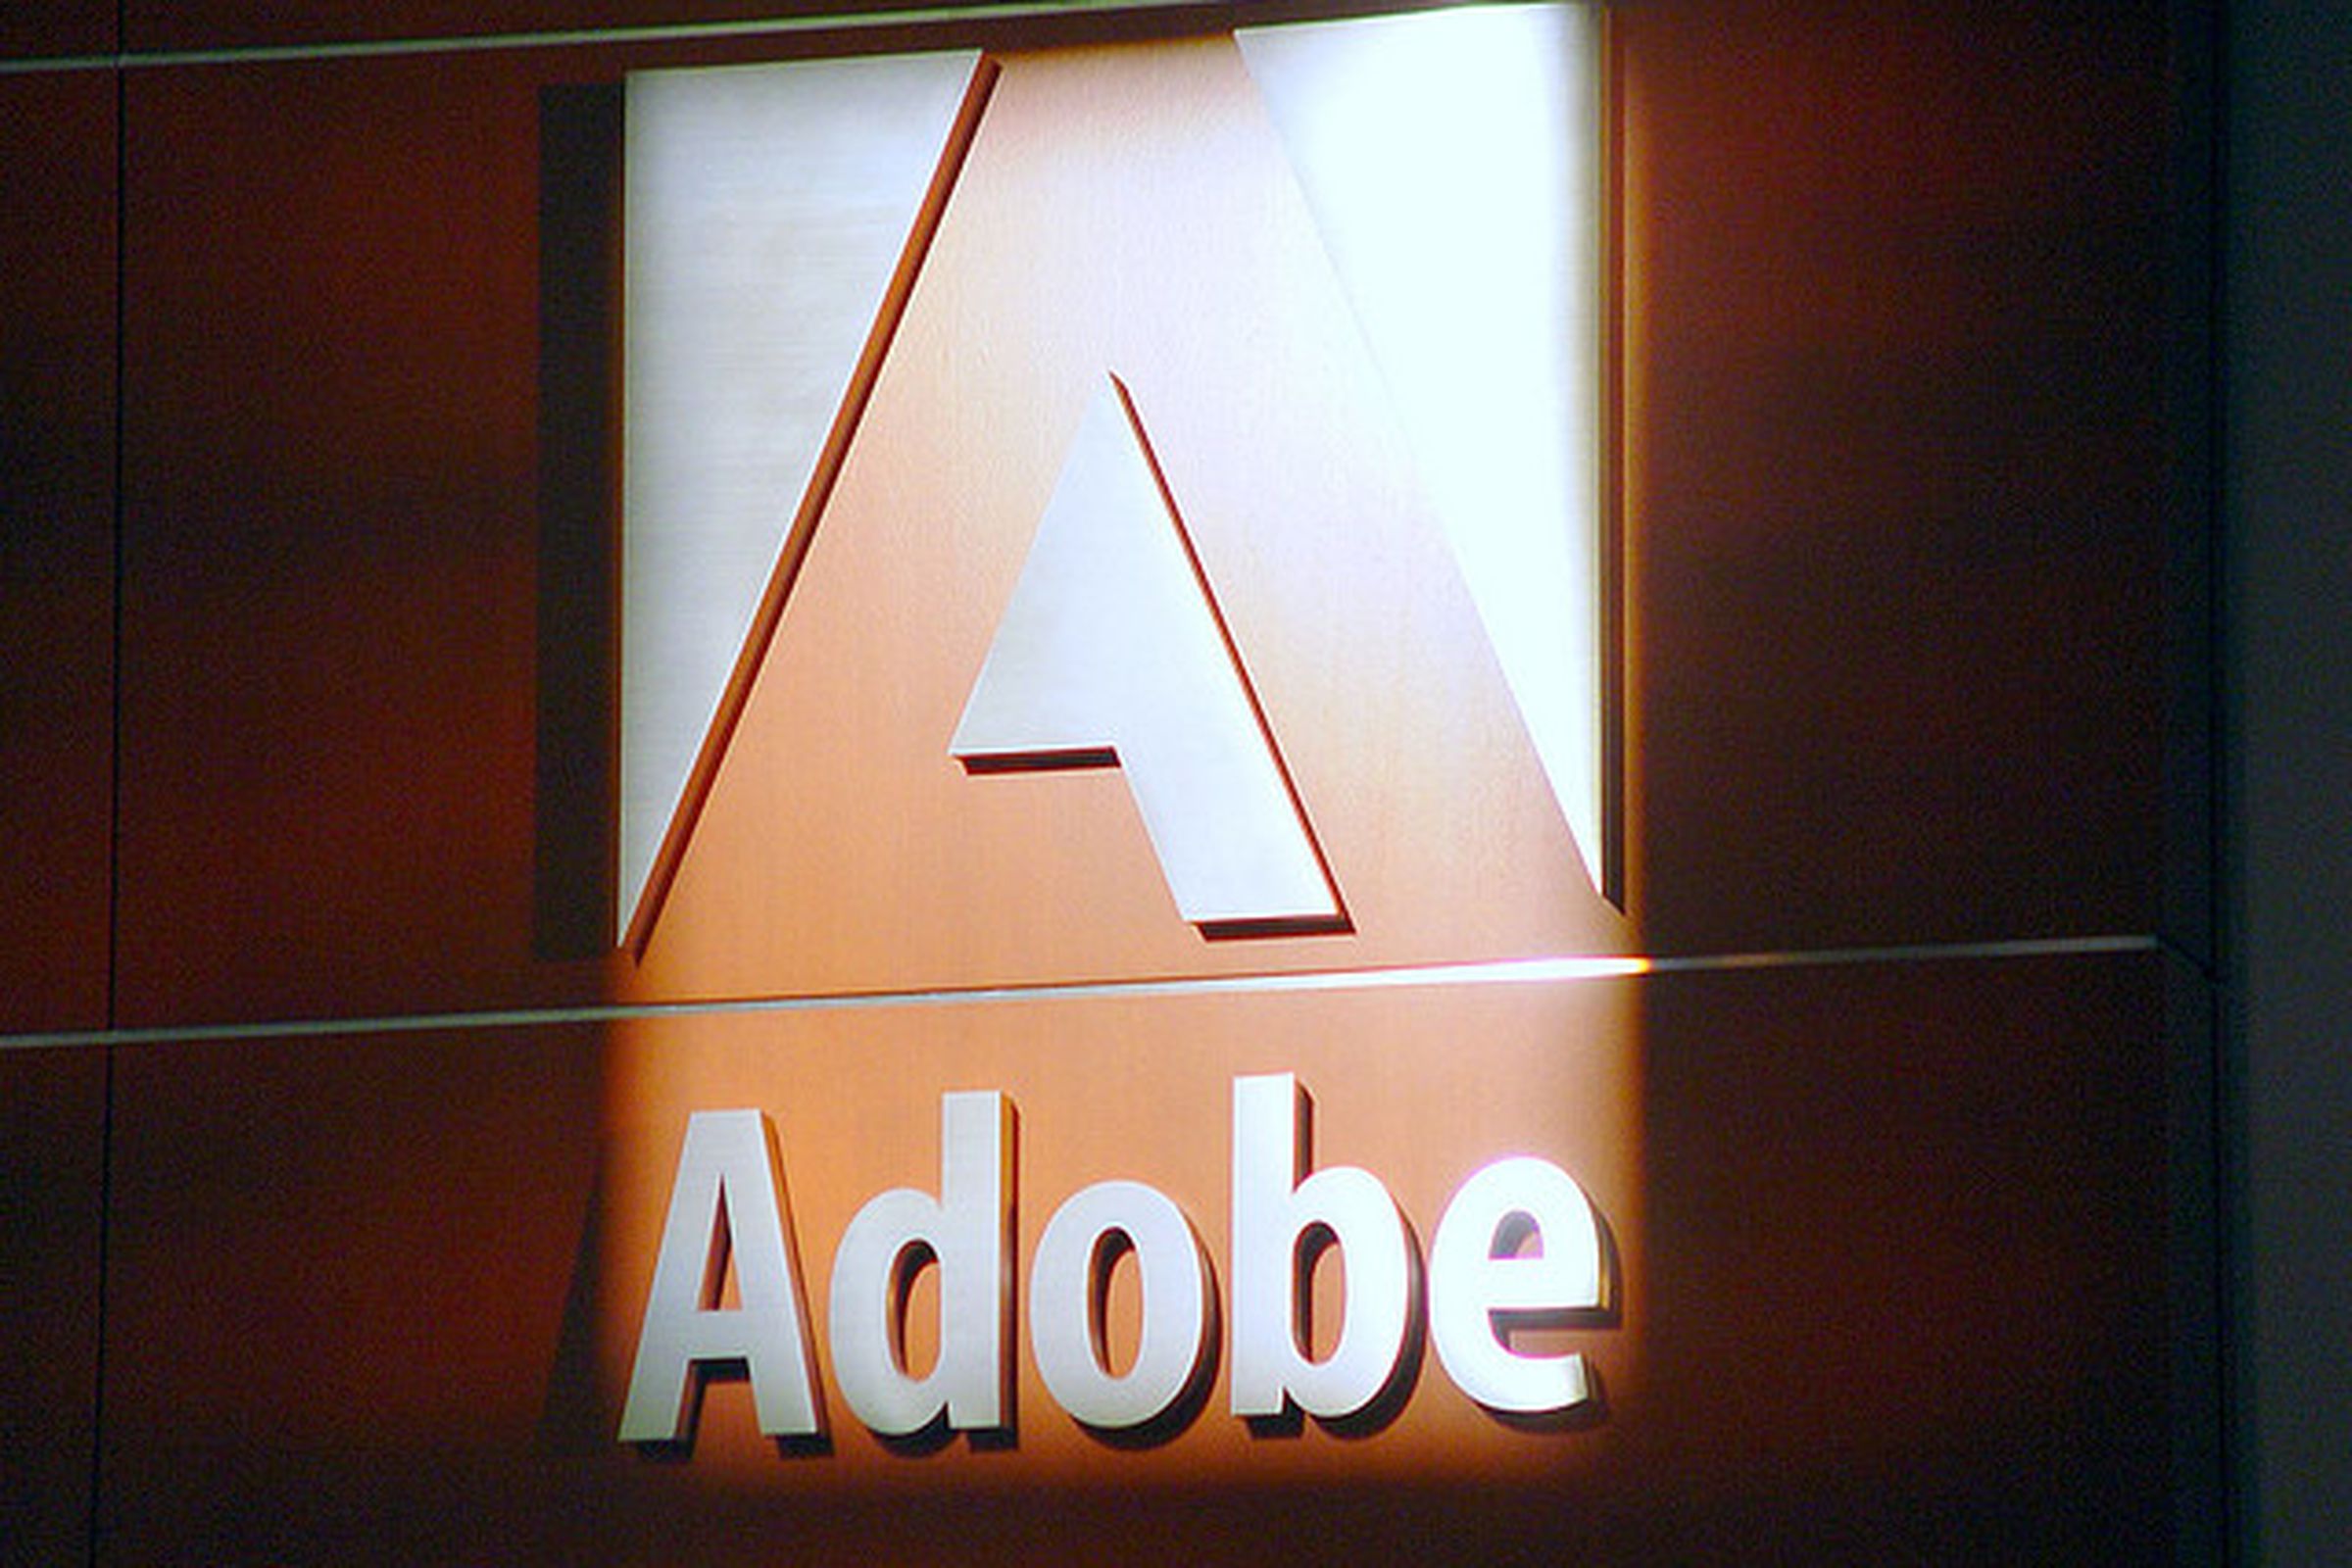 Adobe http://www.flickr.com/photos/midiman/193513407/